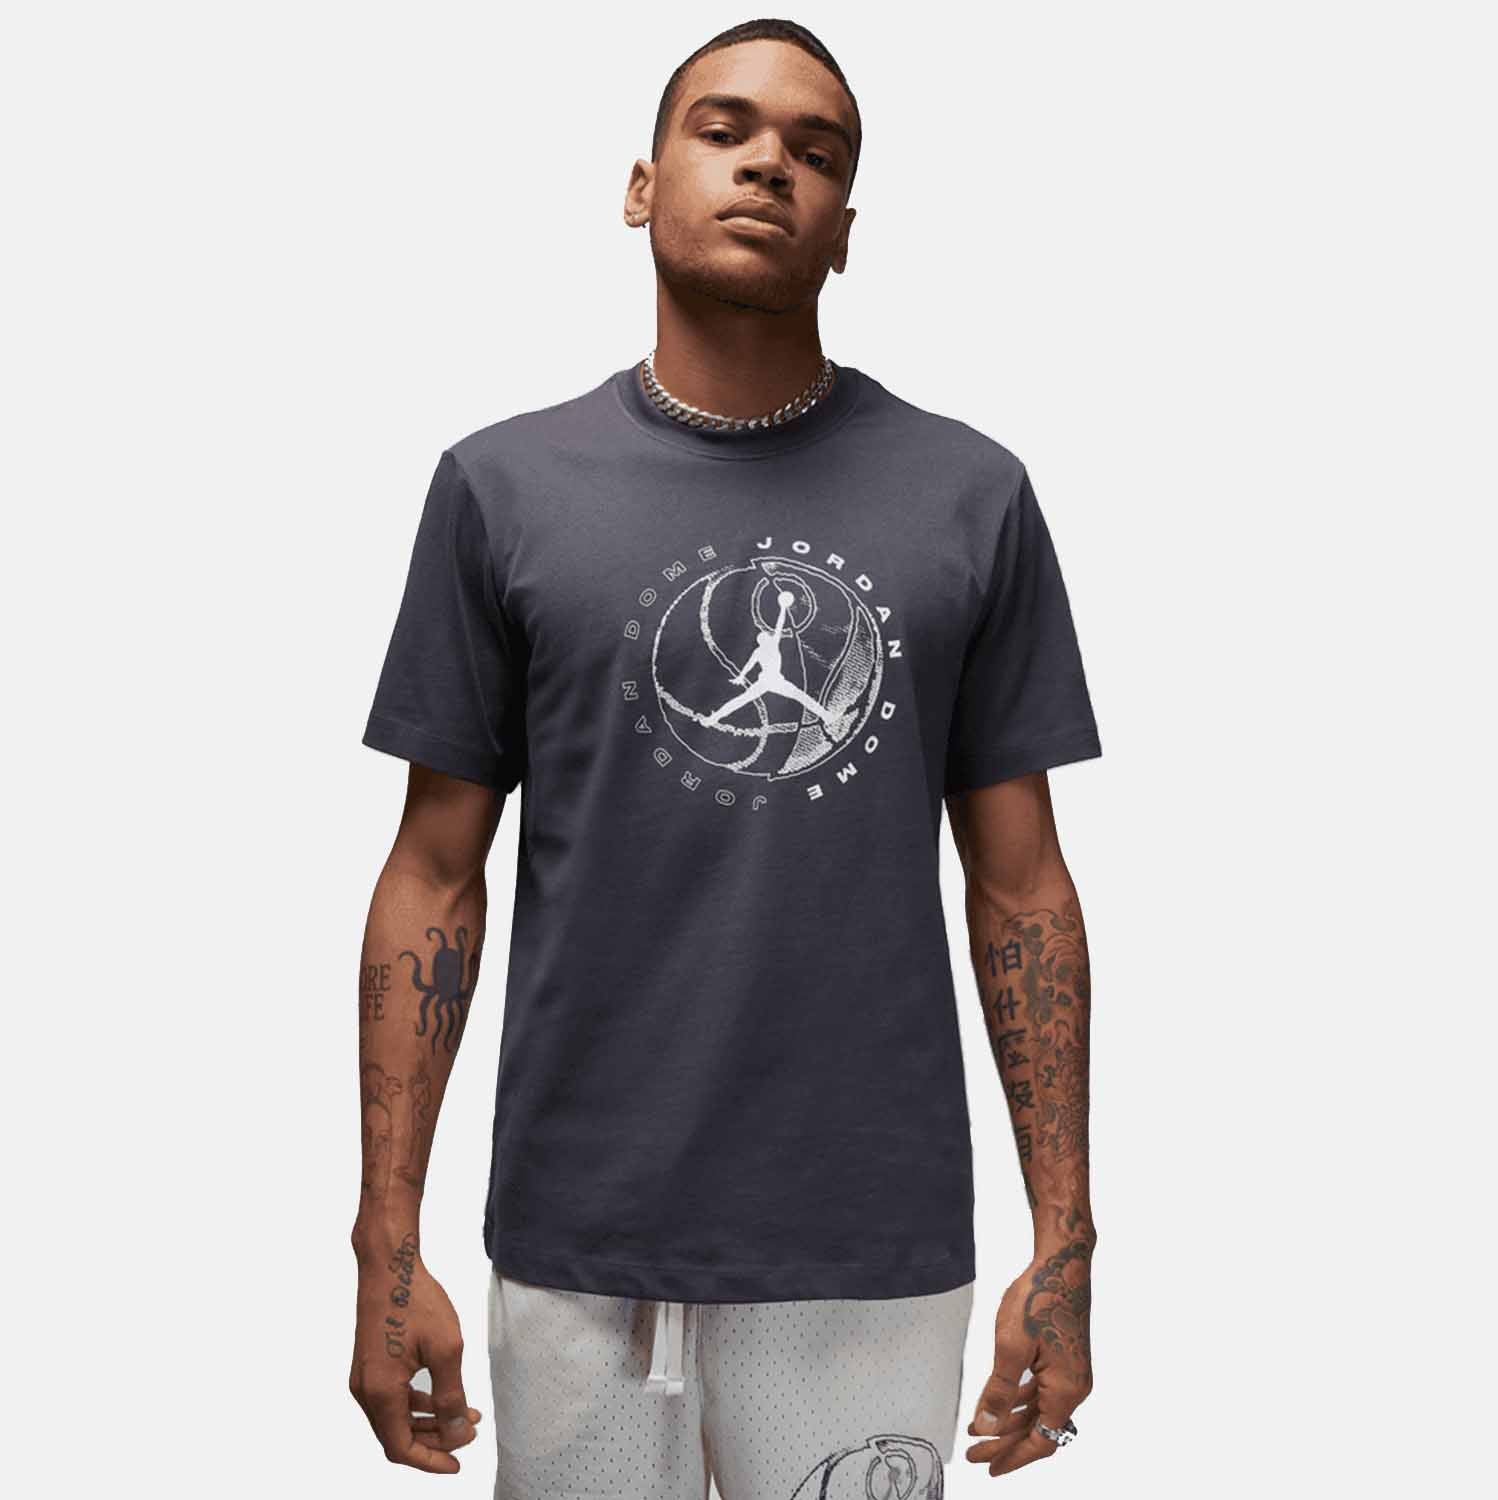 Jordan Men's T-Shirt - Grey - M